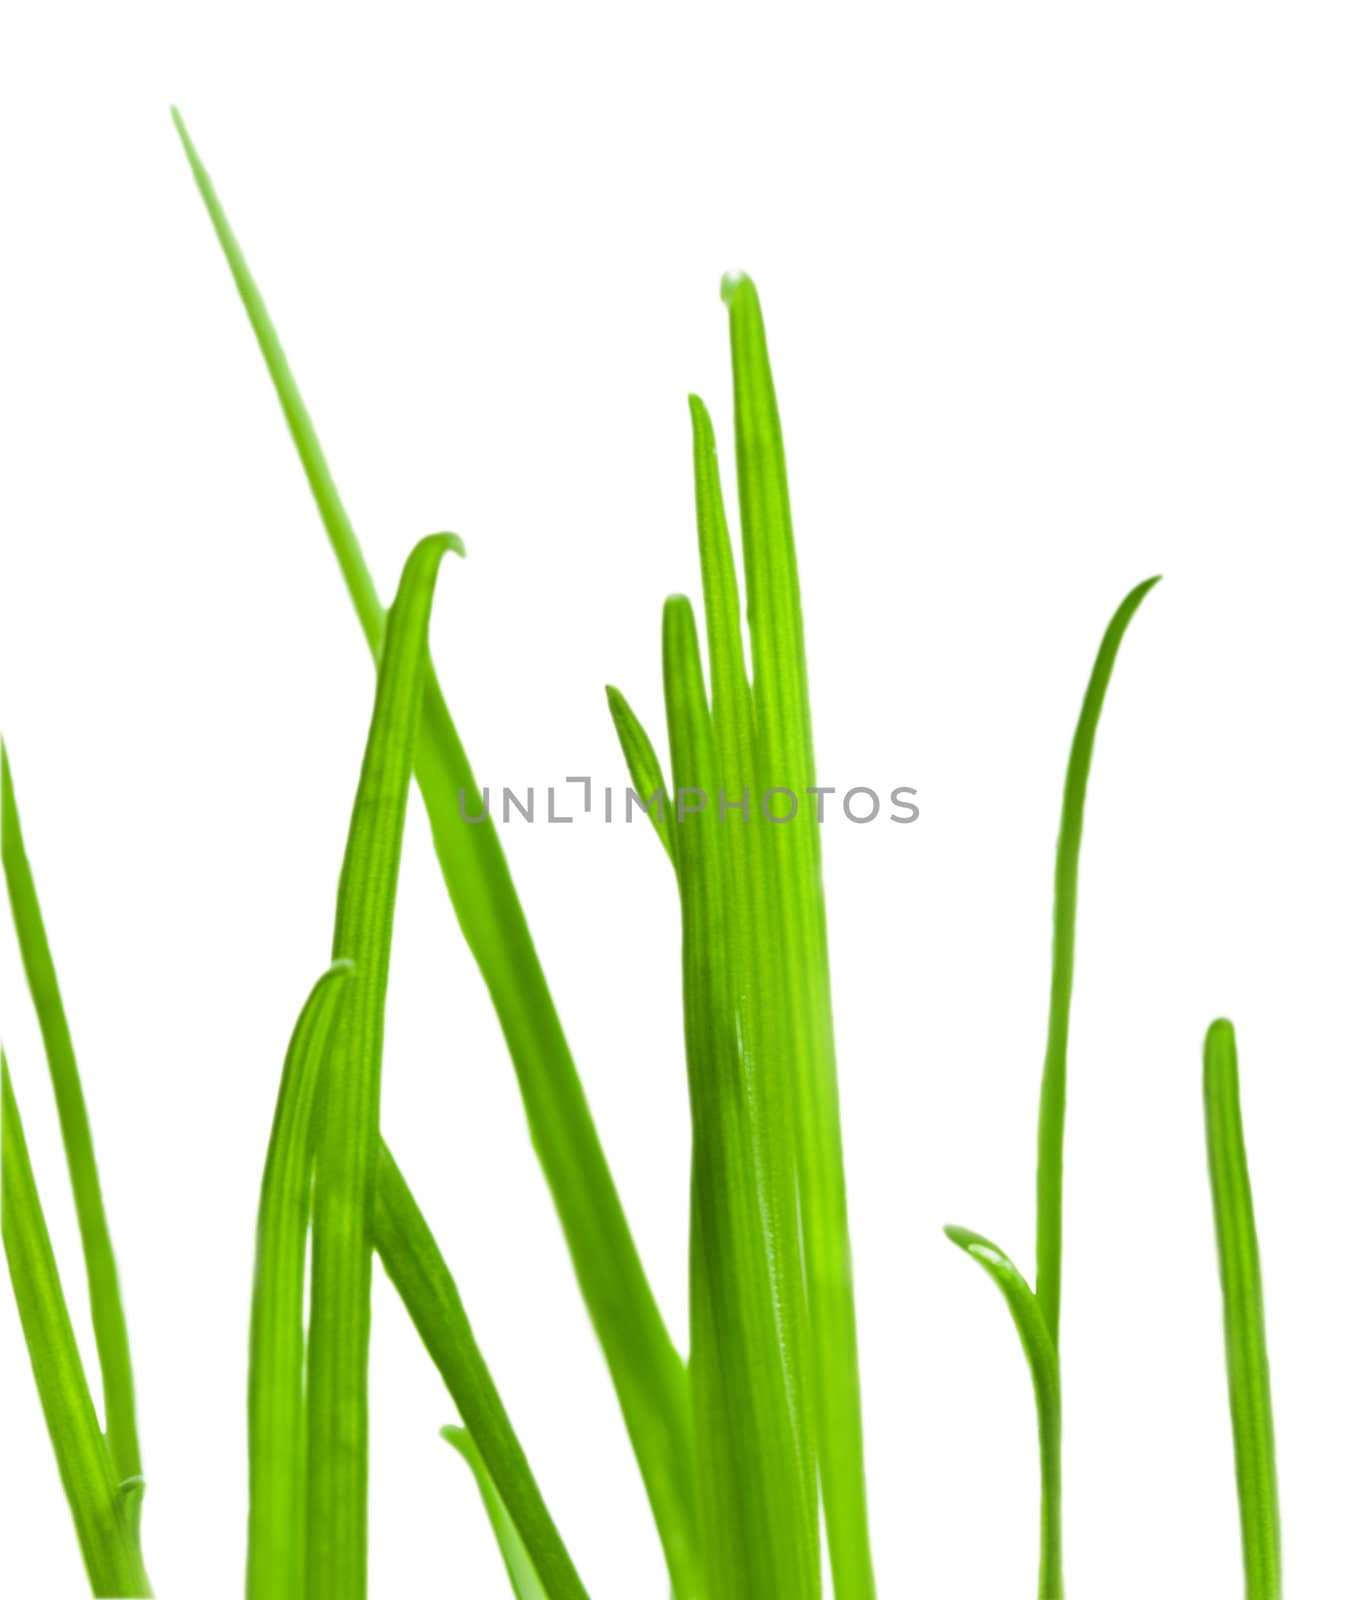 Green grass close-up by rozhenyuk